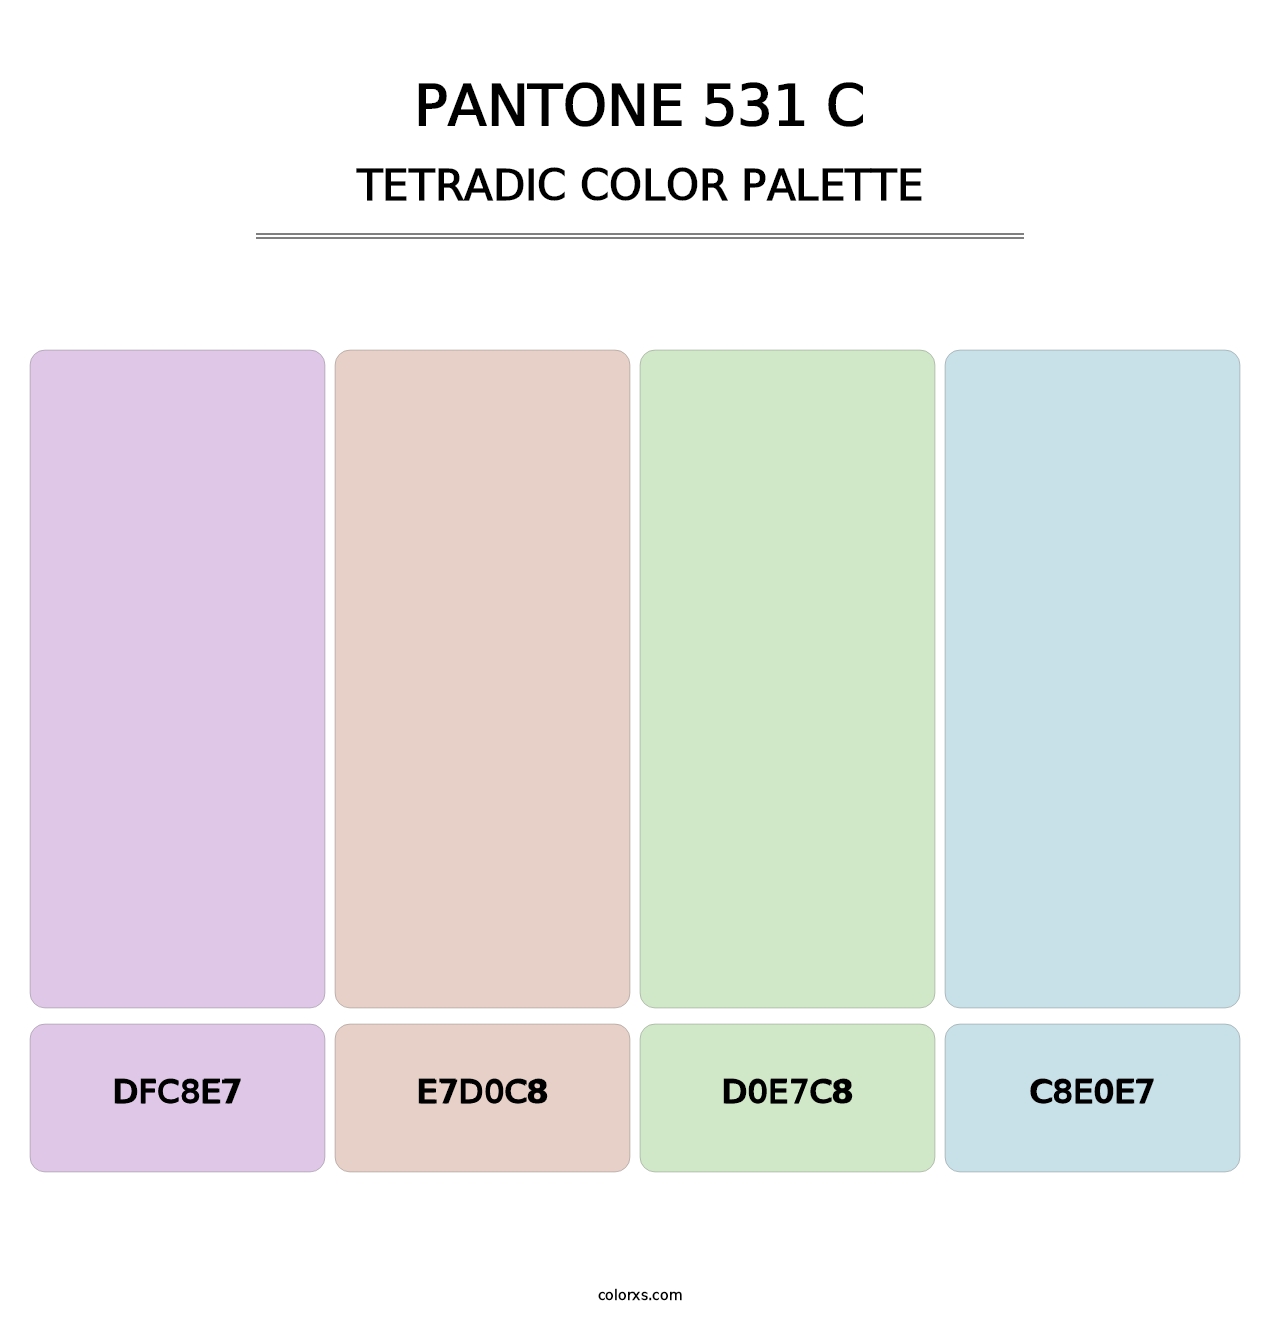 PANTONE 531 C - Tetradic Color Palette